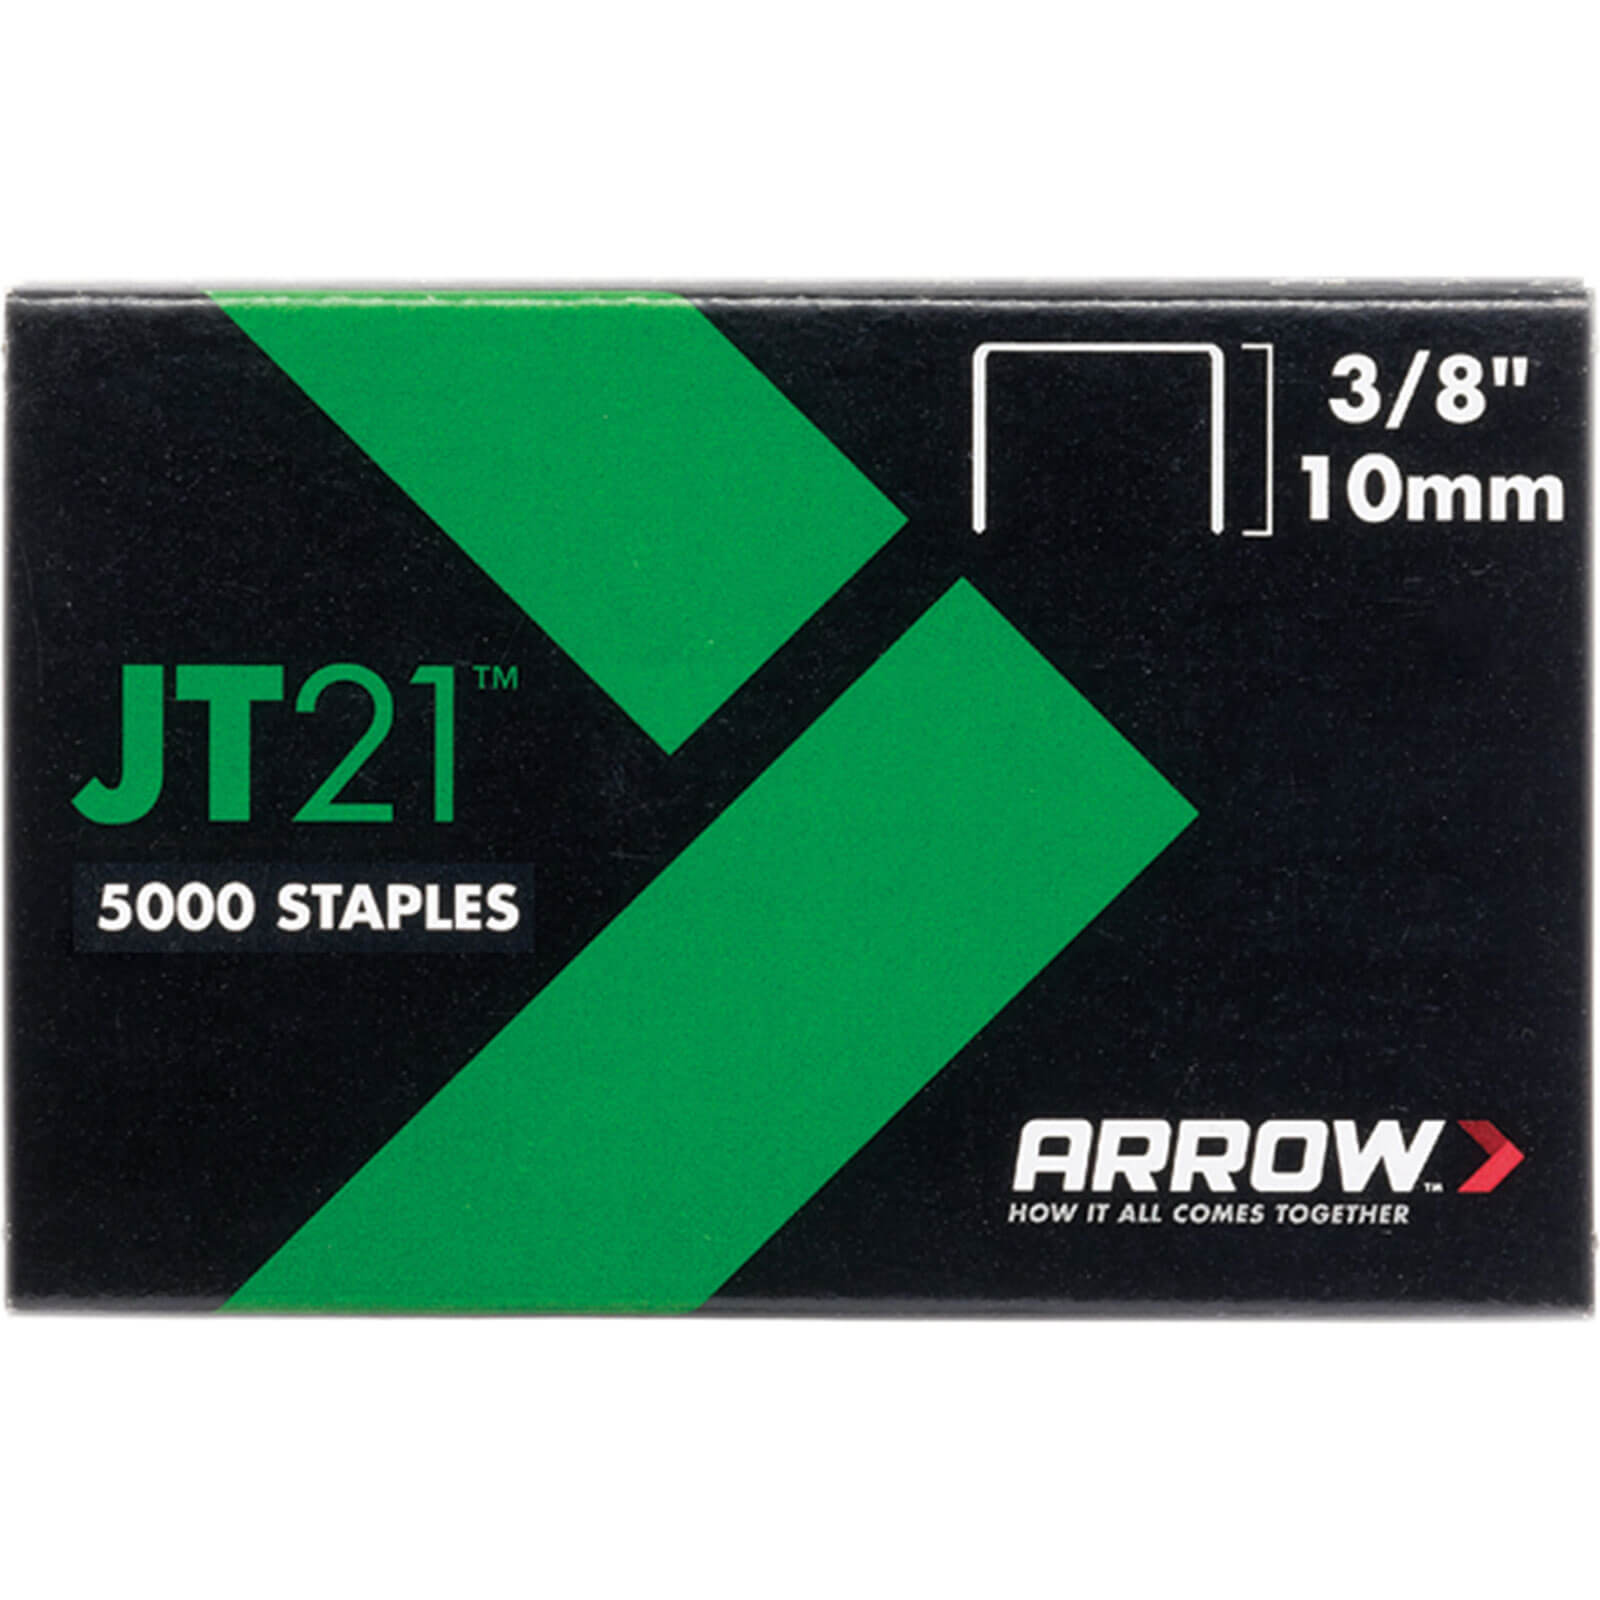 Photos - Staples Arrow  for JT21 / T27 Staple Guns 10mm Pack of 5000 